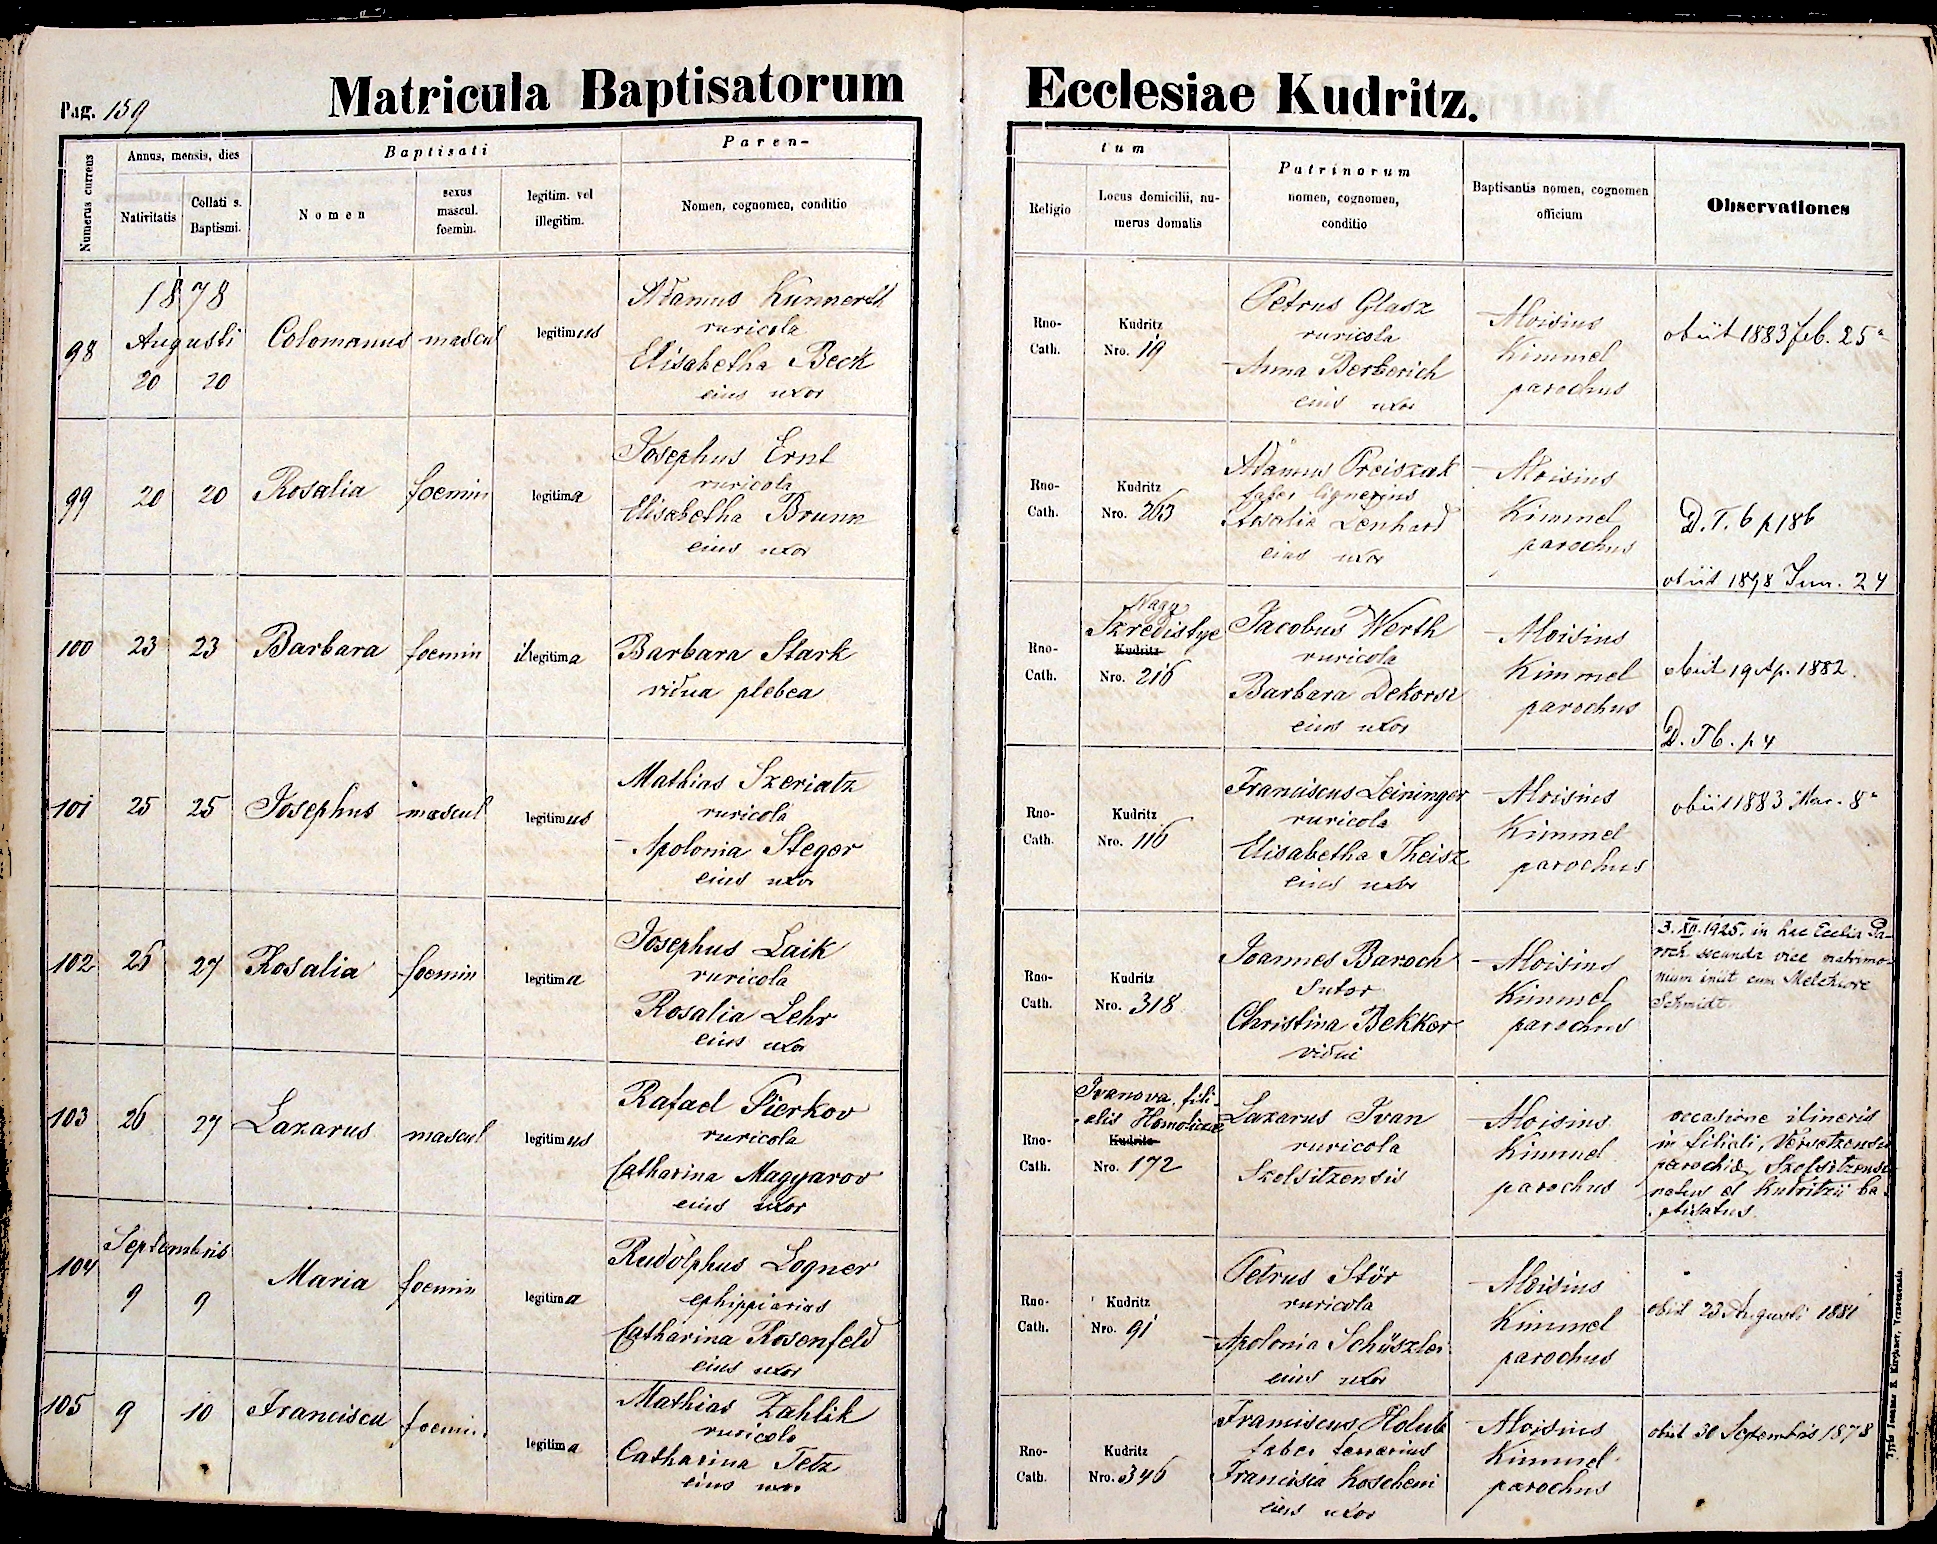 images/church_records/BIRTHS/1870-1879B/1878/159